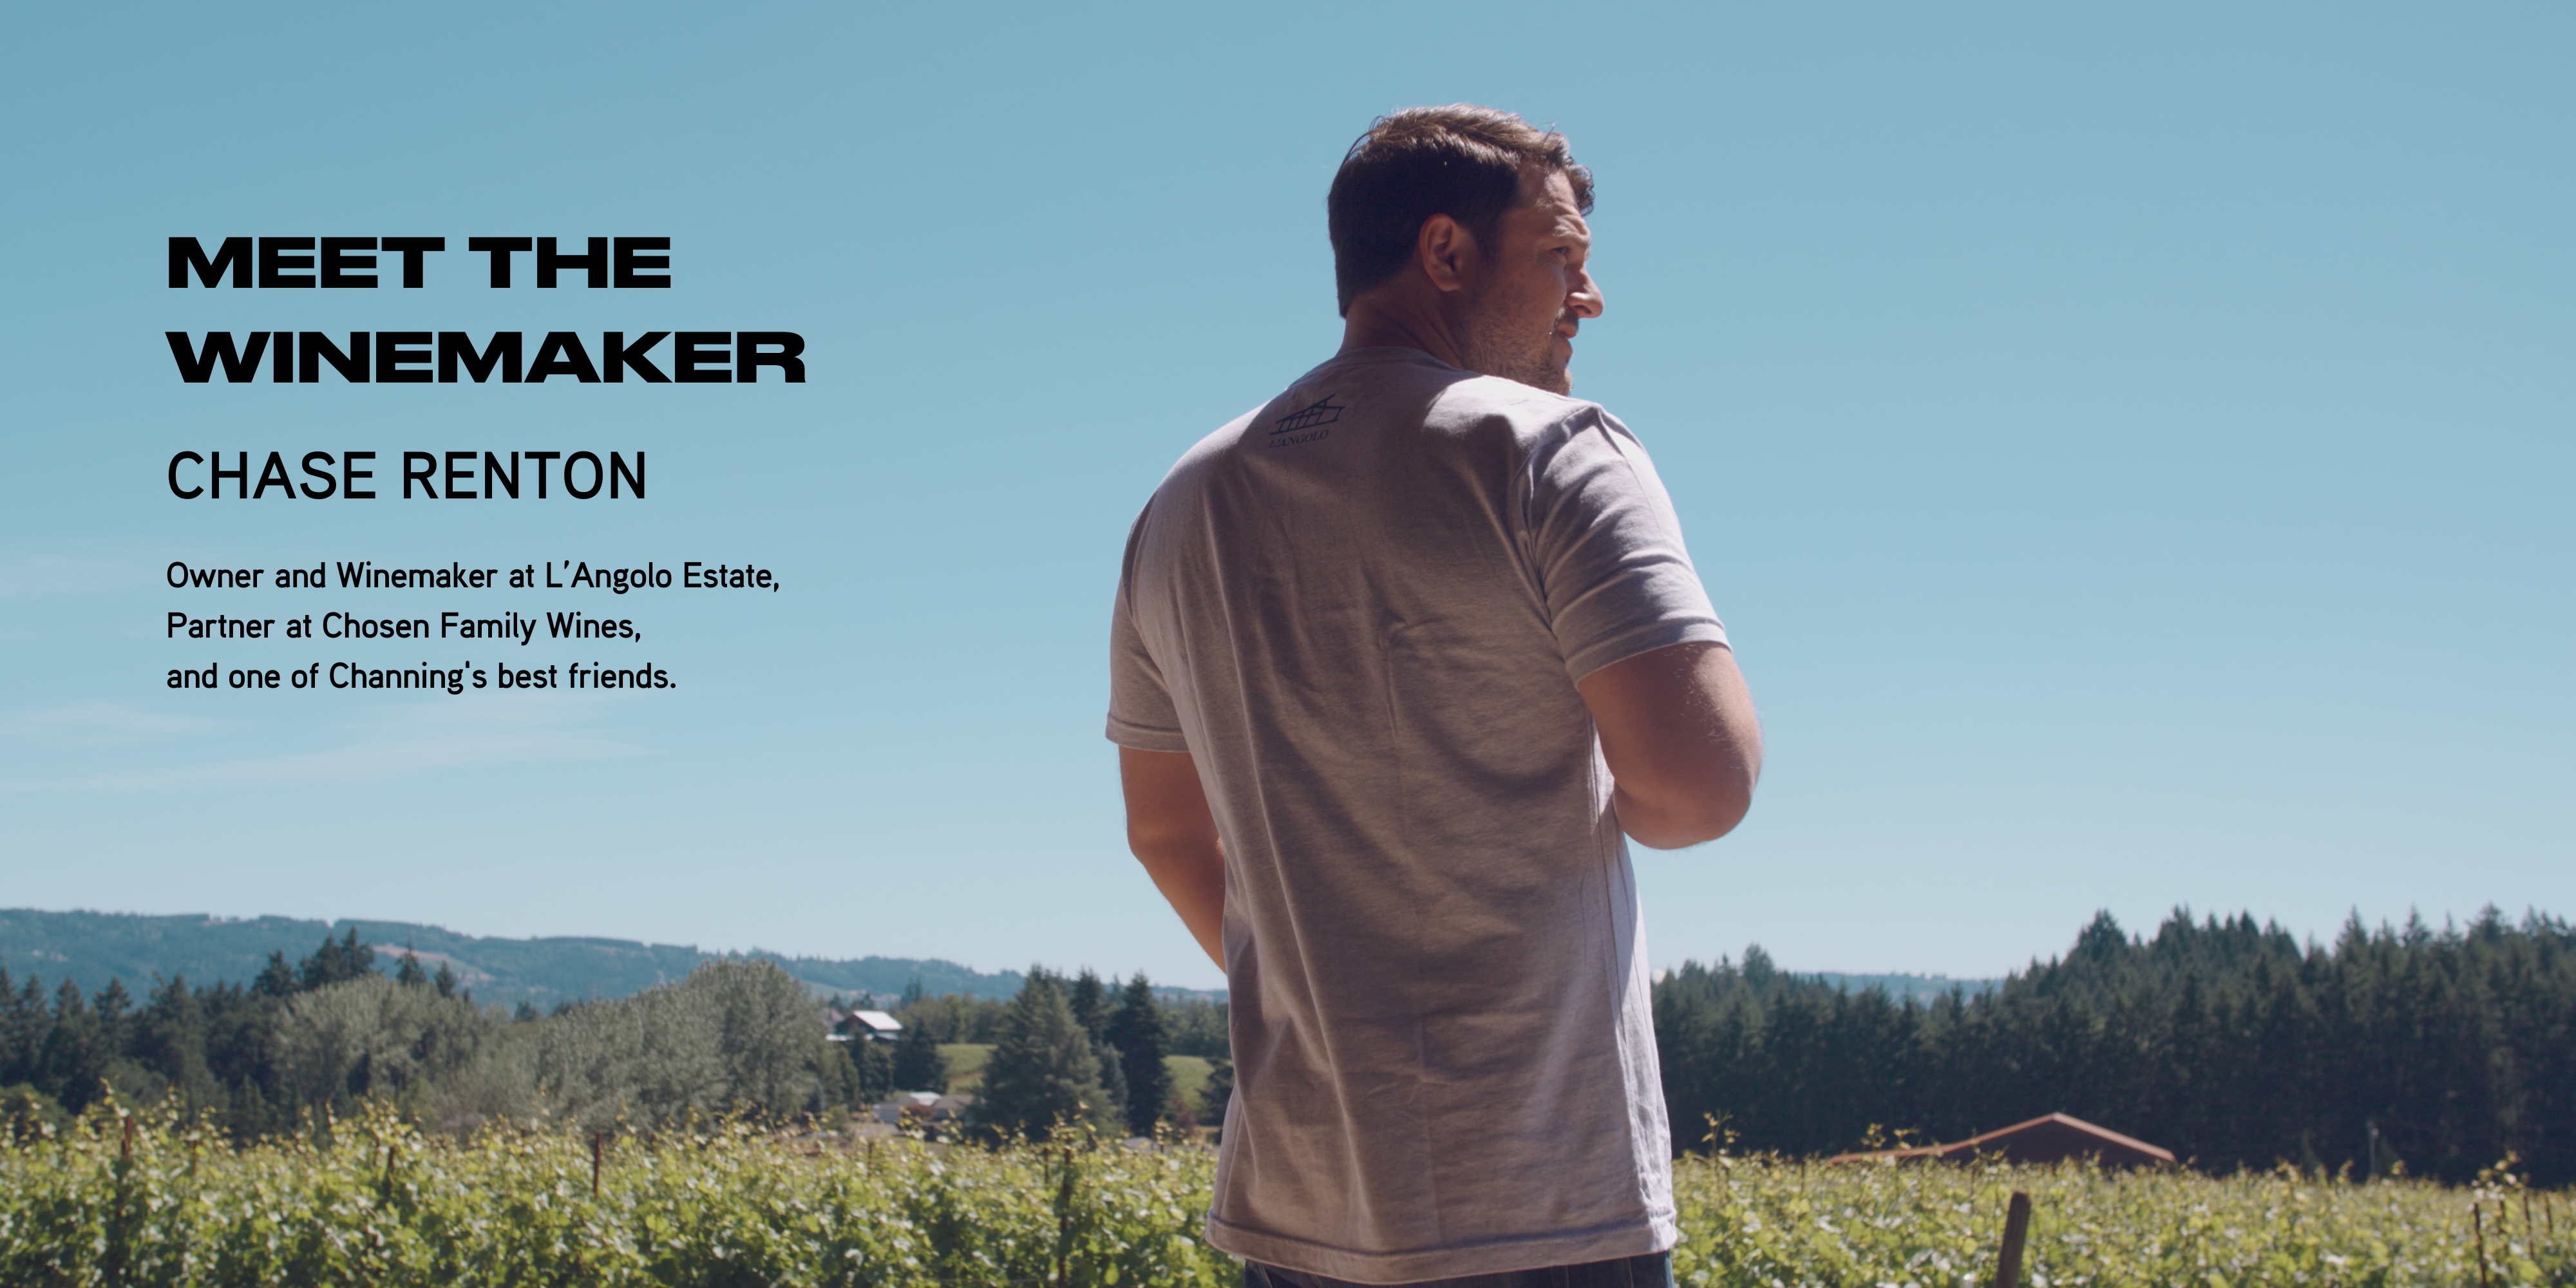 Meet the winemaker, Chase Renton event promo